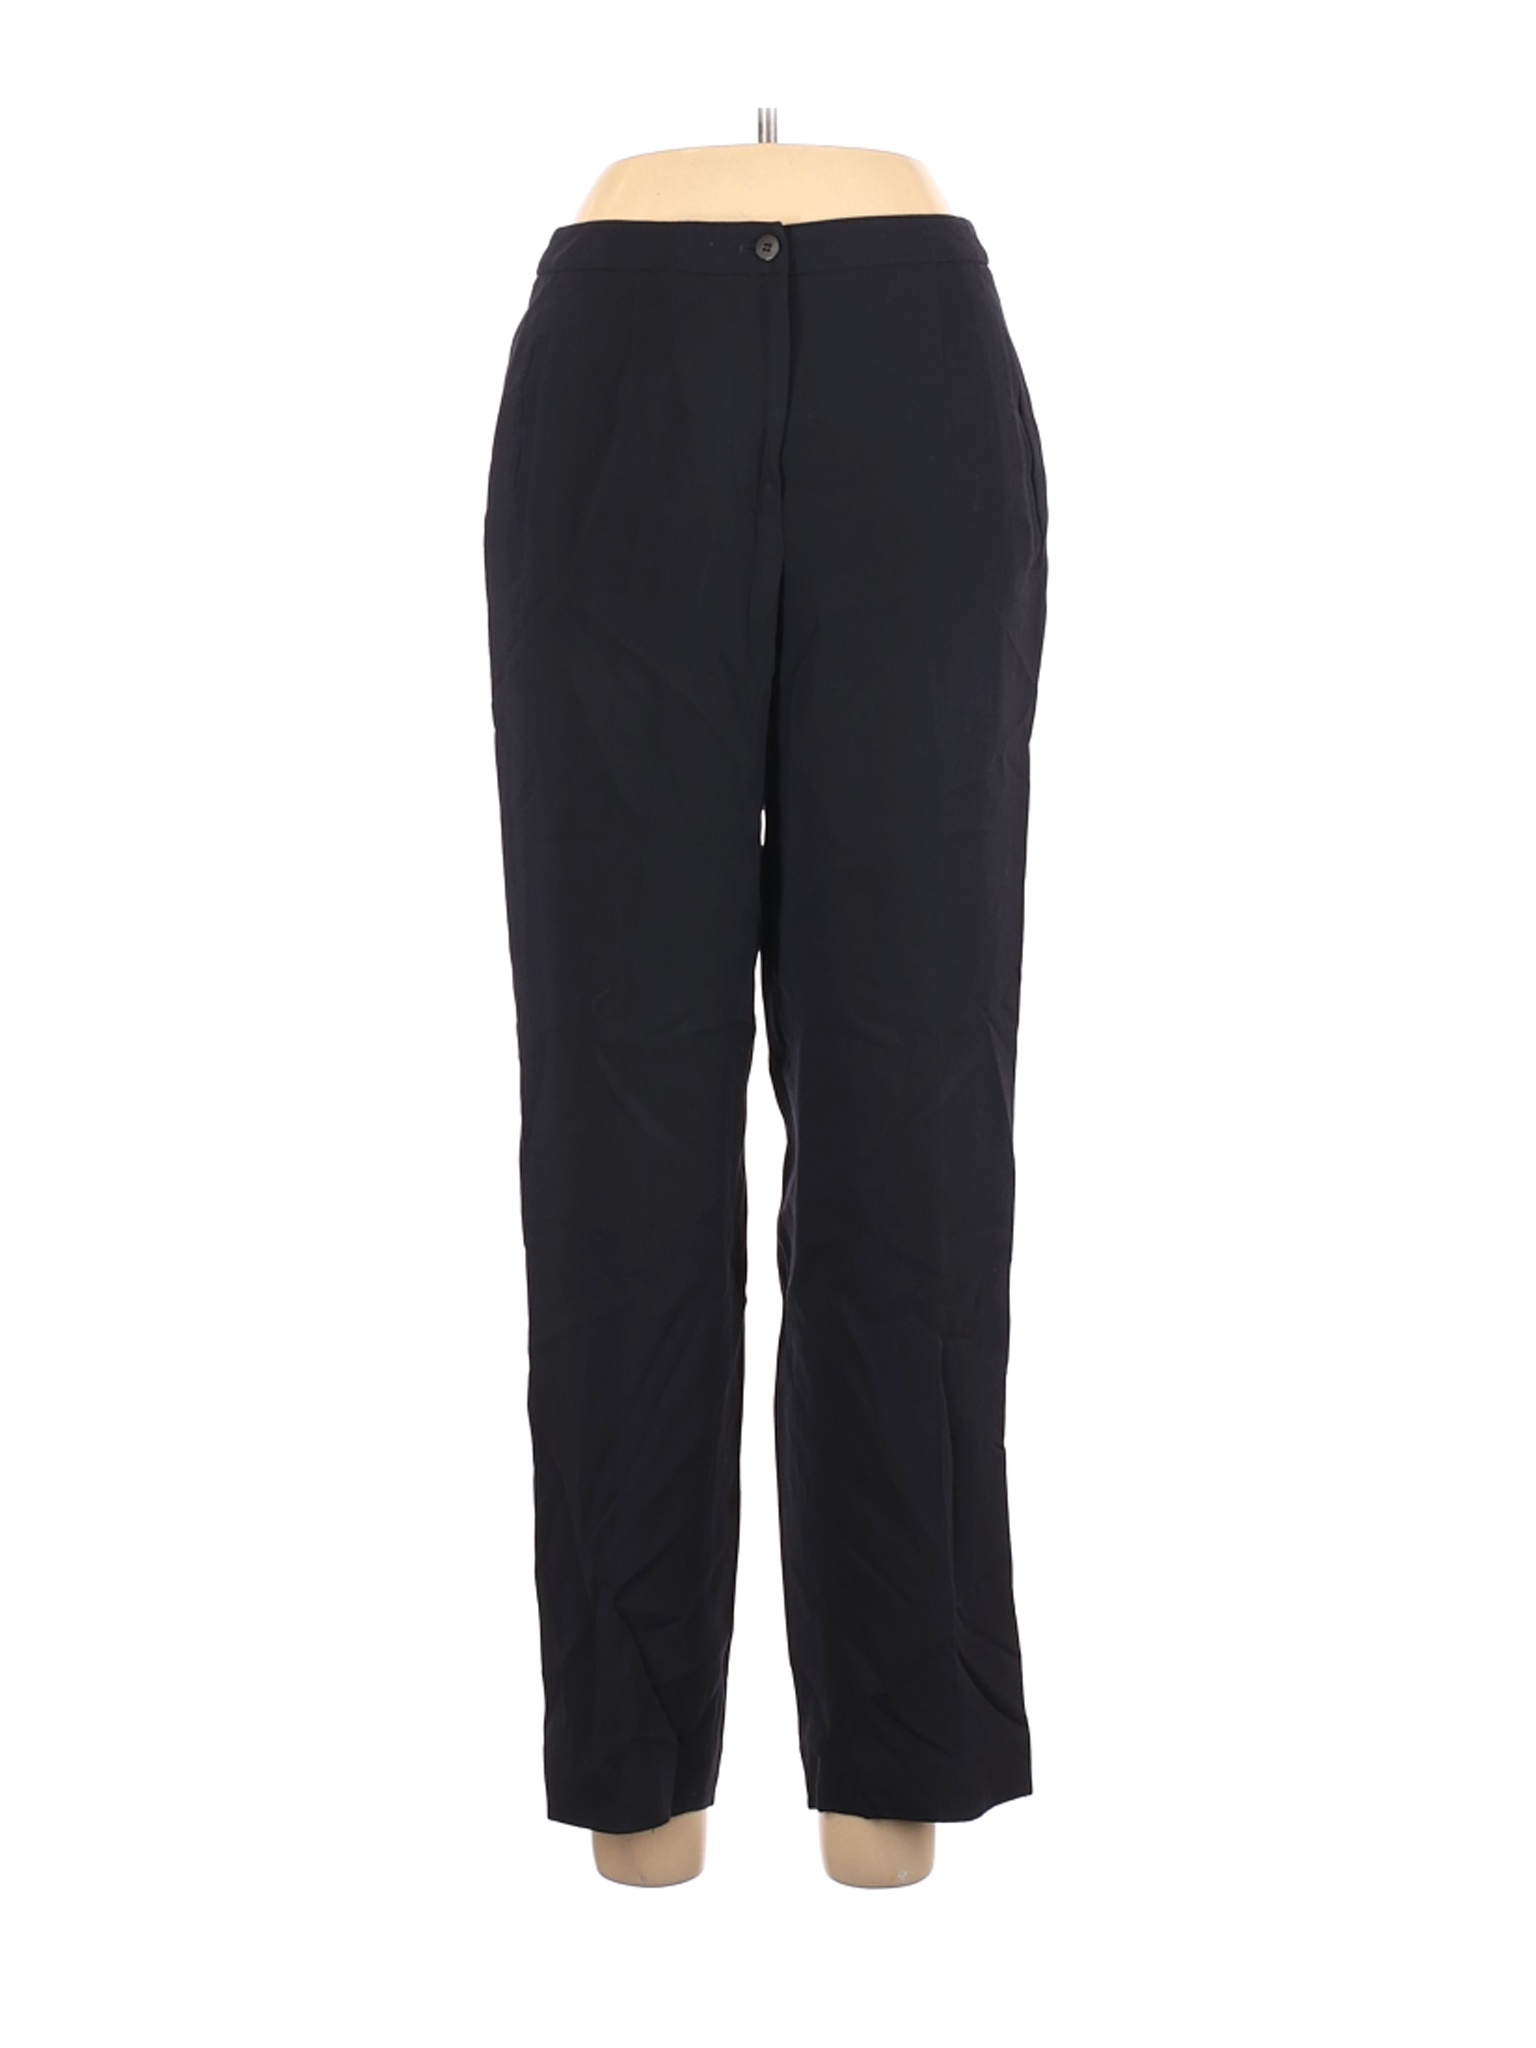 Liz Claiborne Women Black Dress Pants 6 | eBay